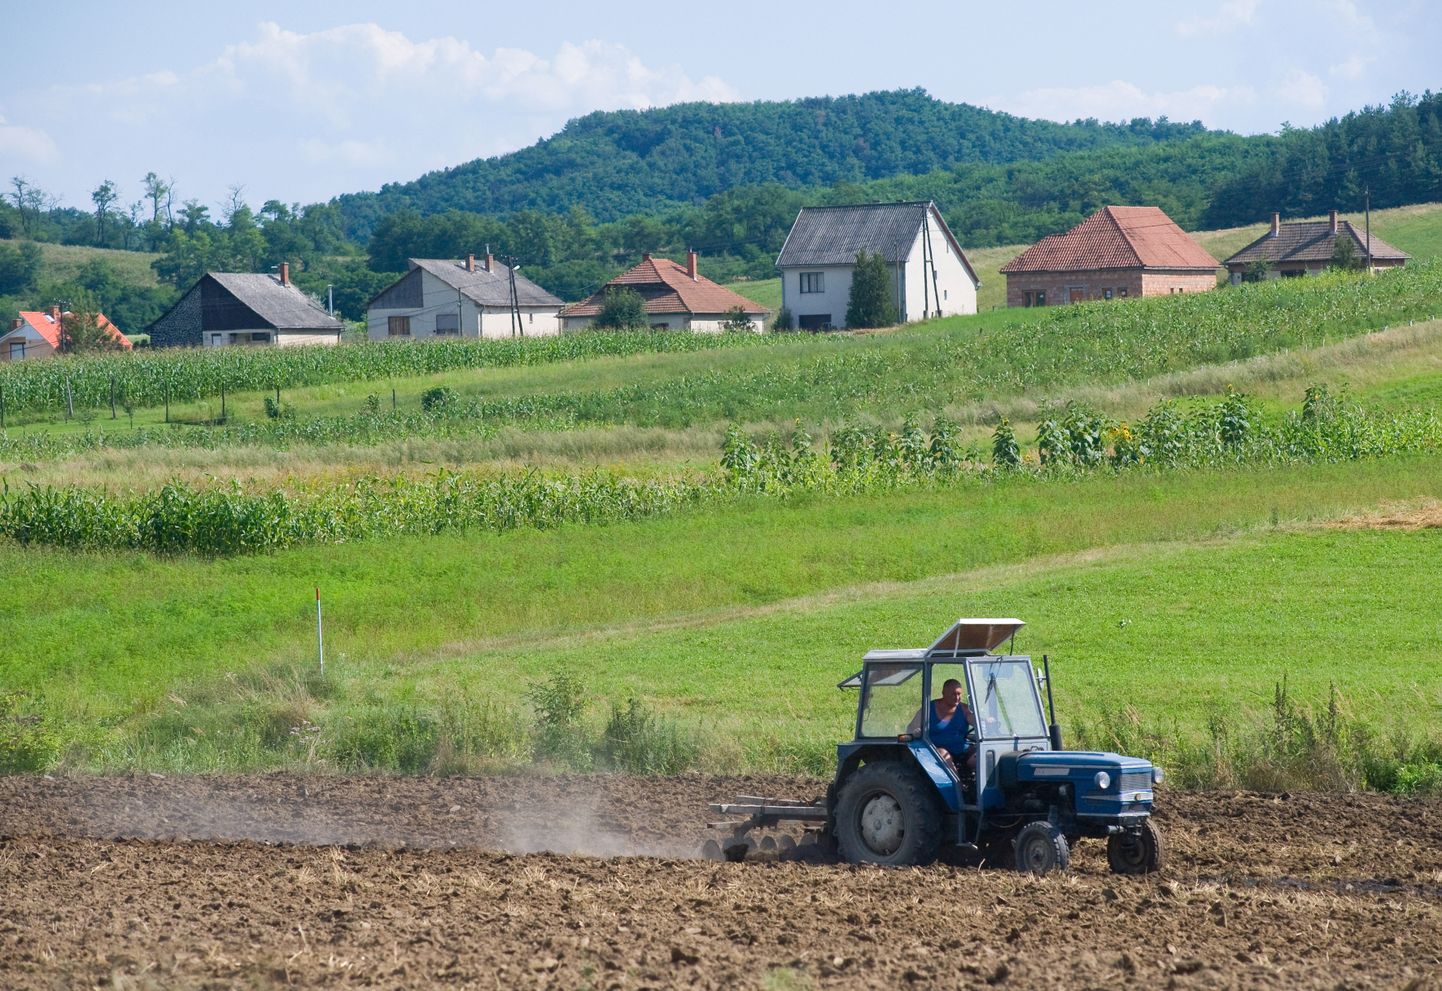 Traktor kündmas põldu Tachty külas Rimavská Sobota piikonnas Slovakkias.